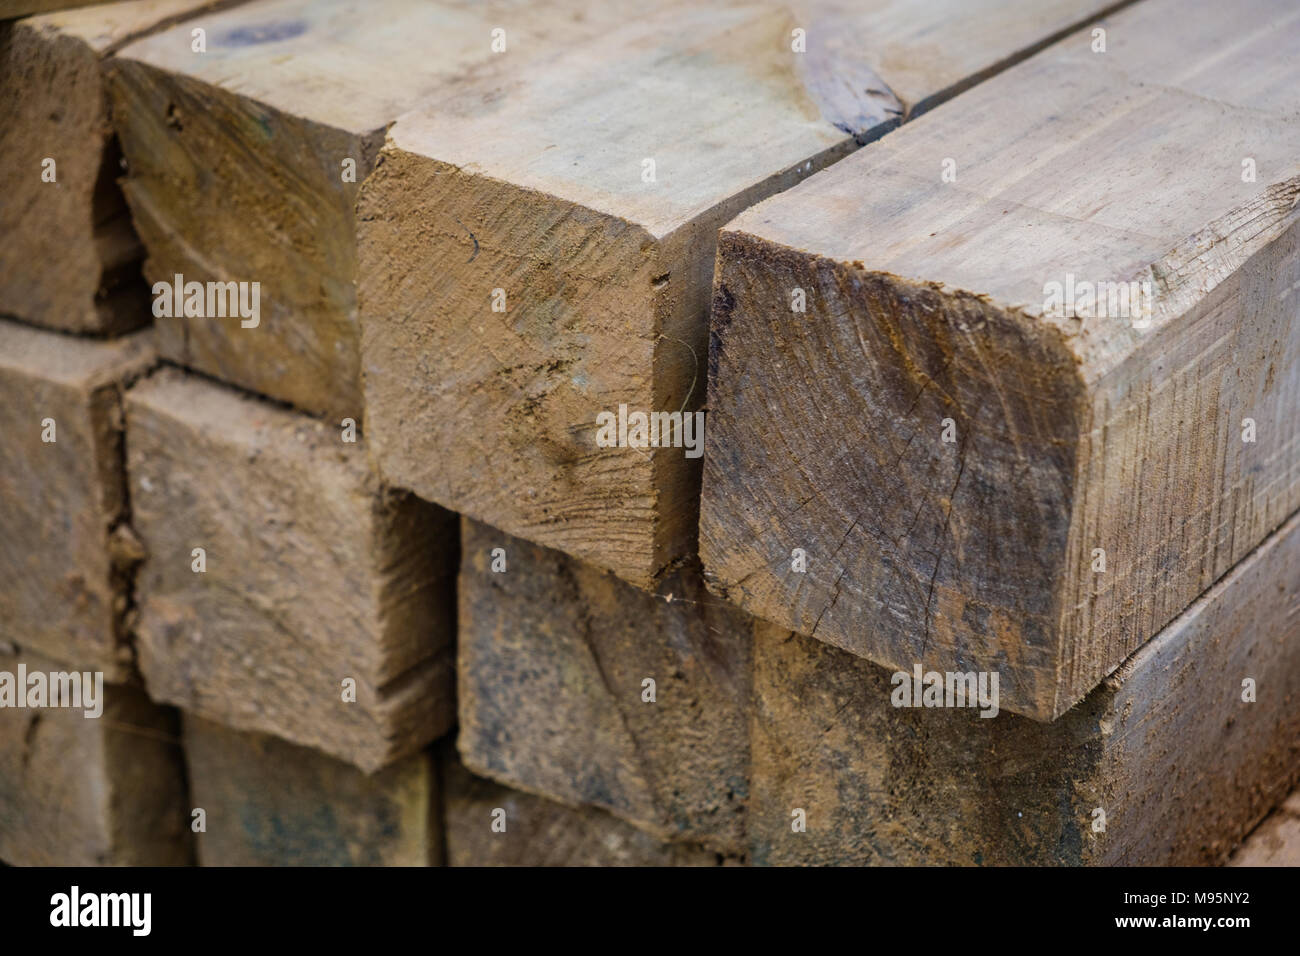 Stapel von Holz, Baumaterialien, Holz für den Bau-Holz closeup - Stockfoto